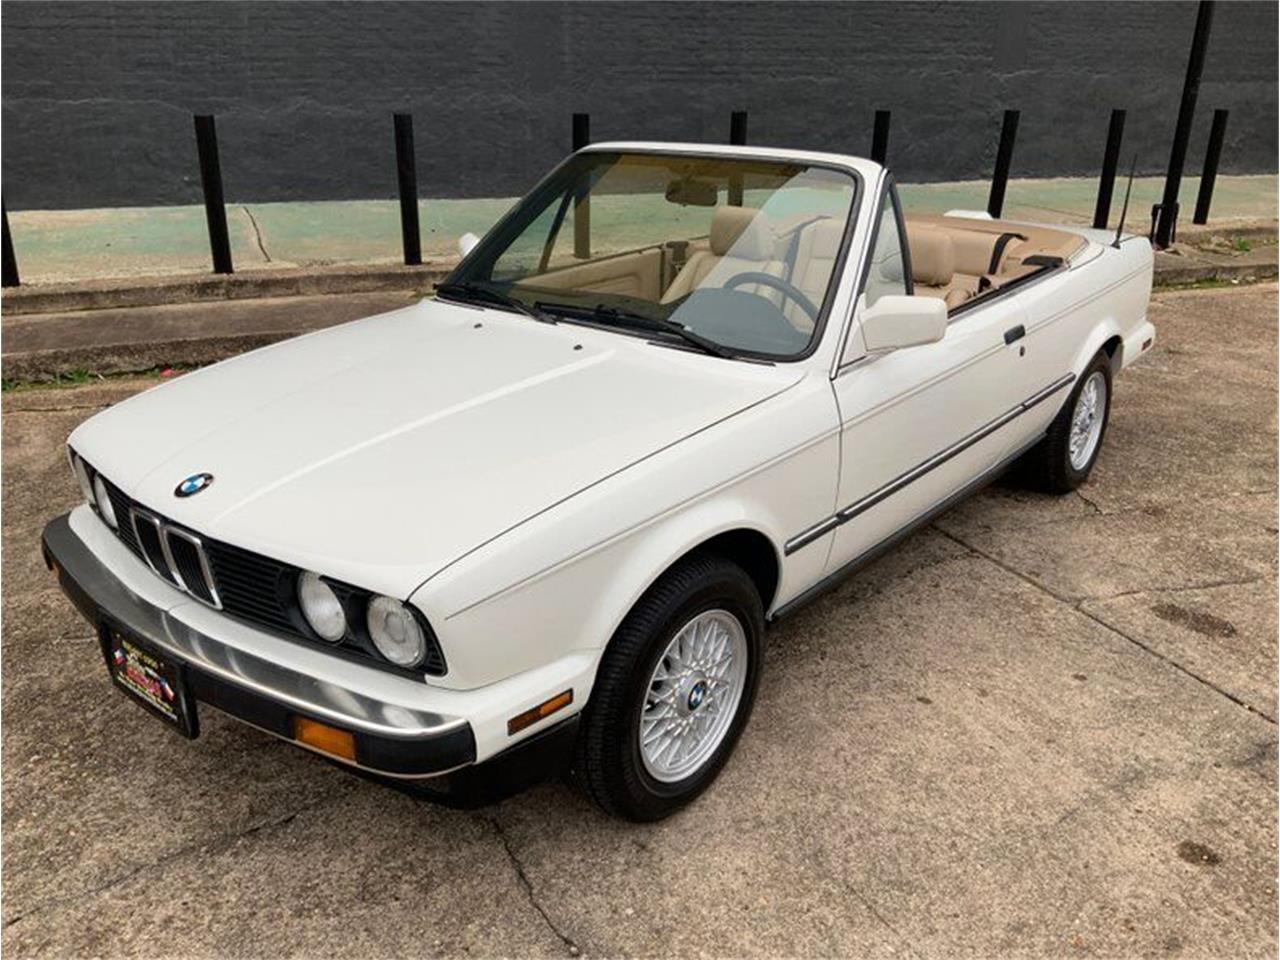 For Sale: 1989 BMW 3 Series in Fredericksburg, Texas for sale in Fredericksburg, TX